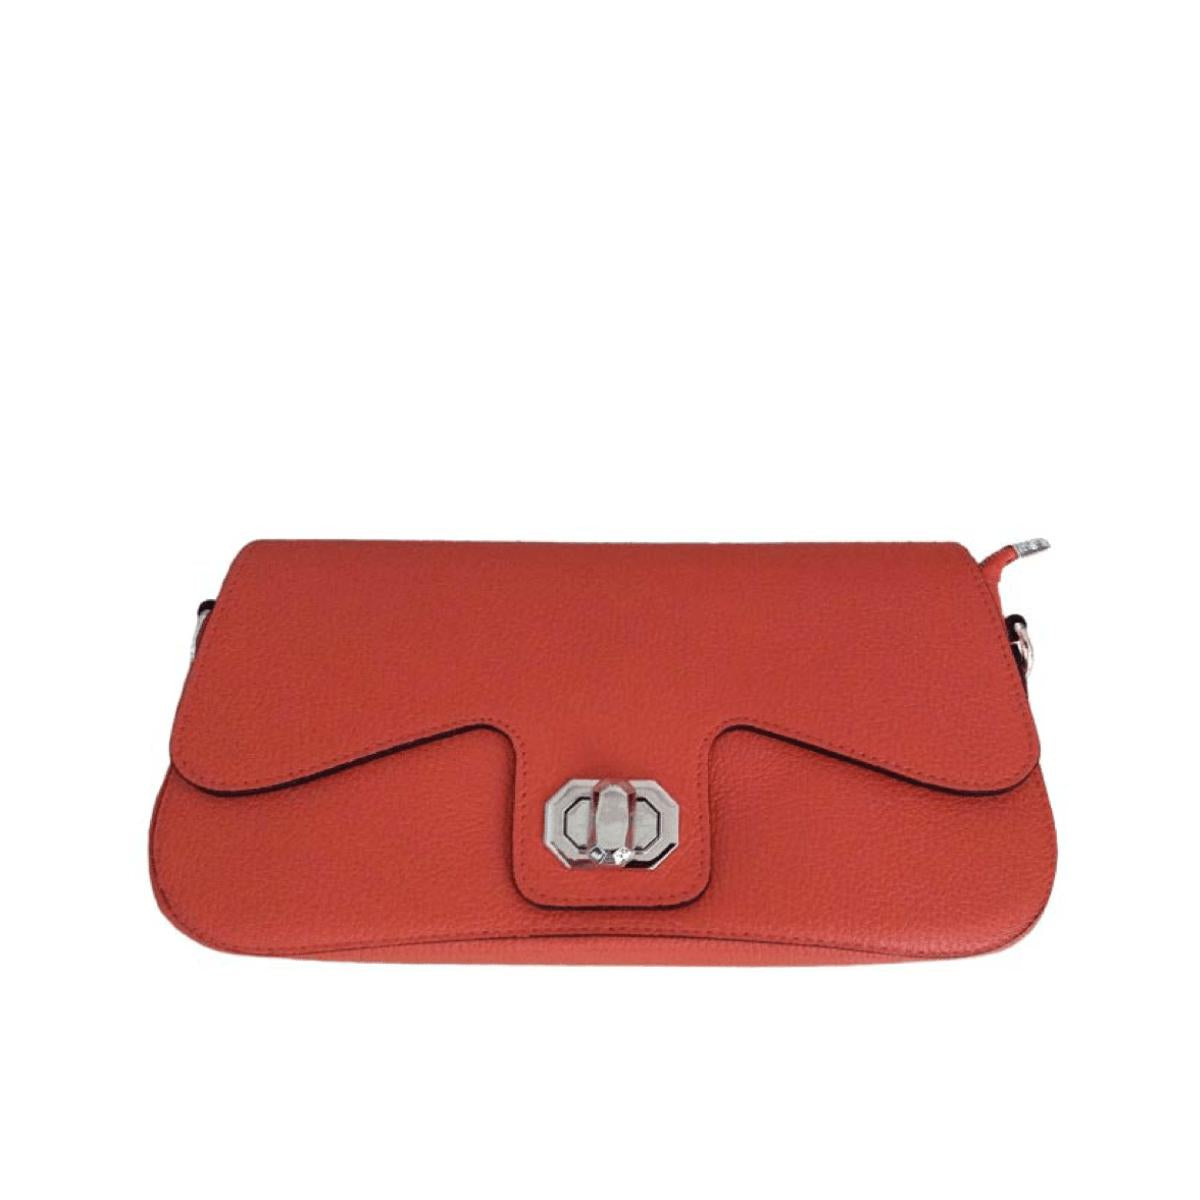 HHB Handbags Orange Trina Italian Pebble Leather City Bag